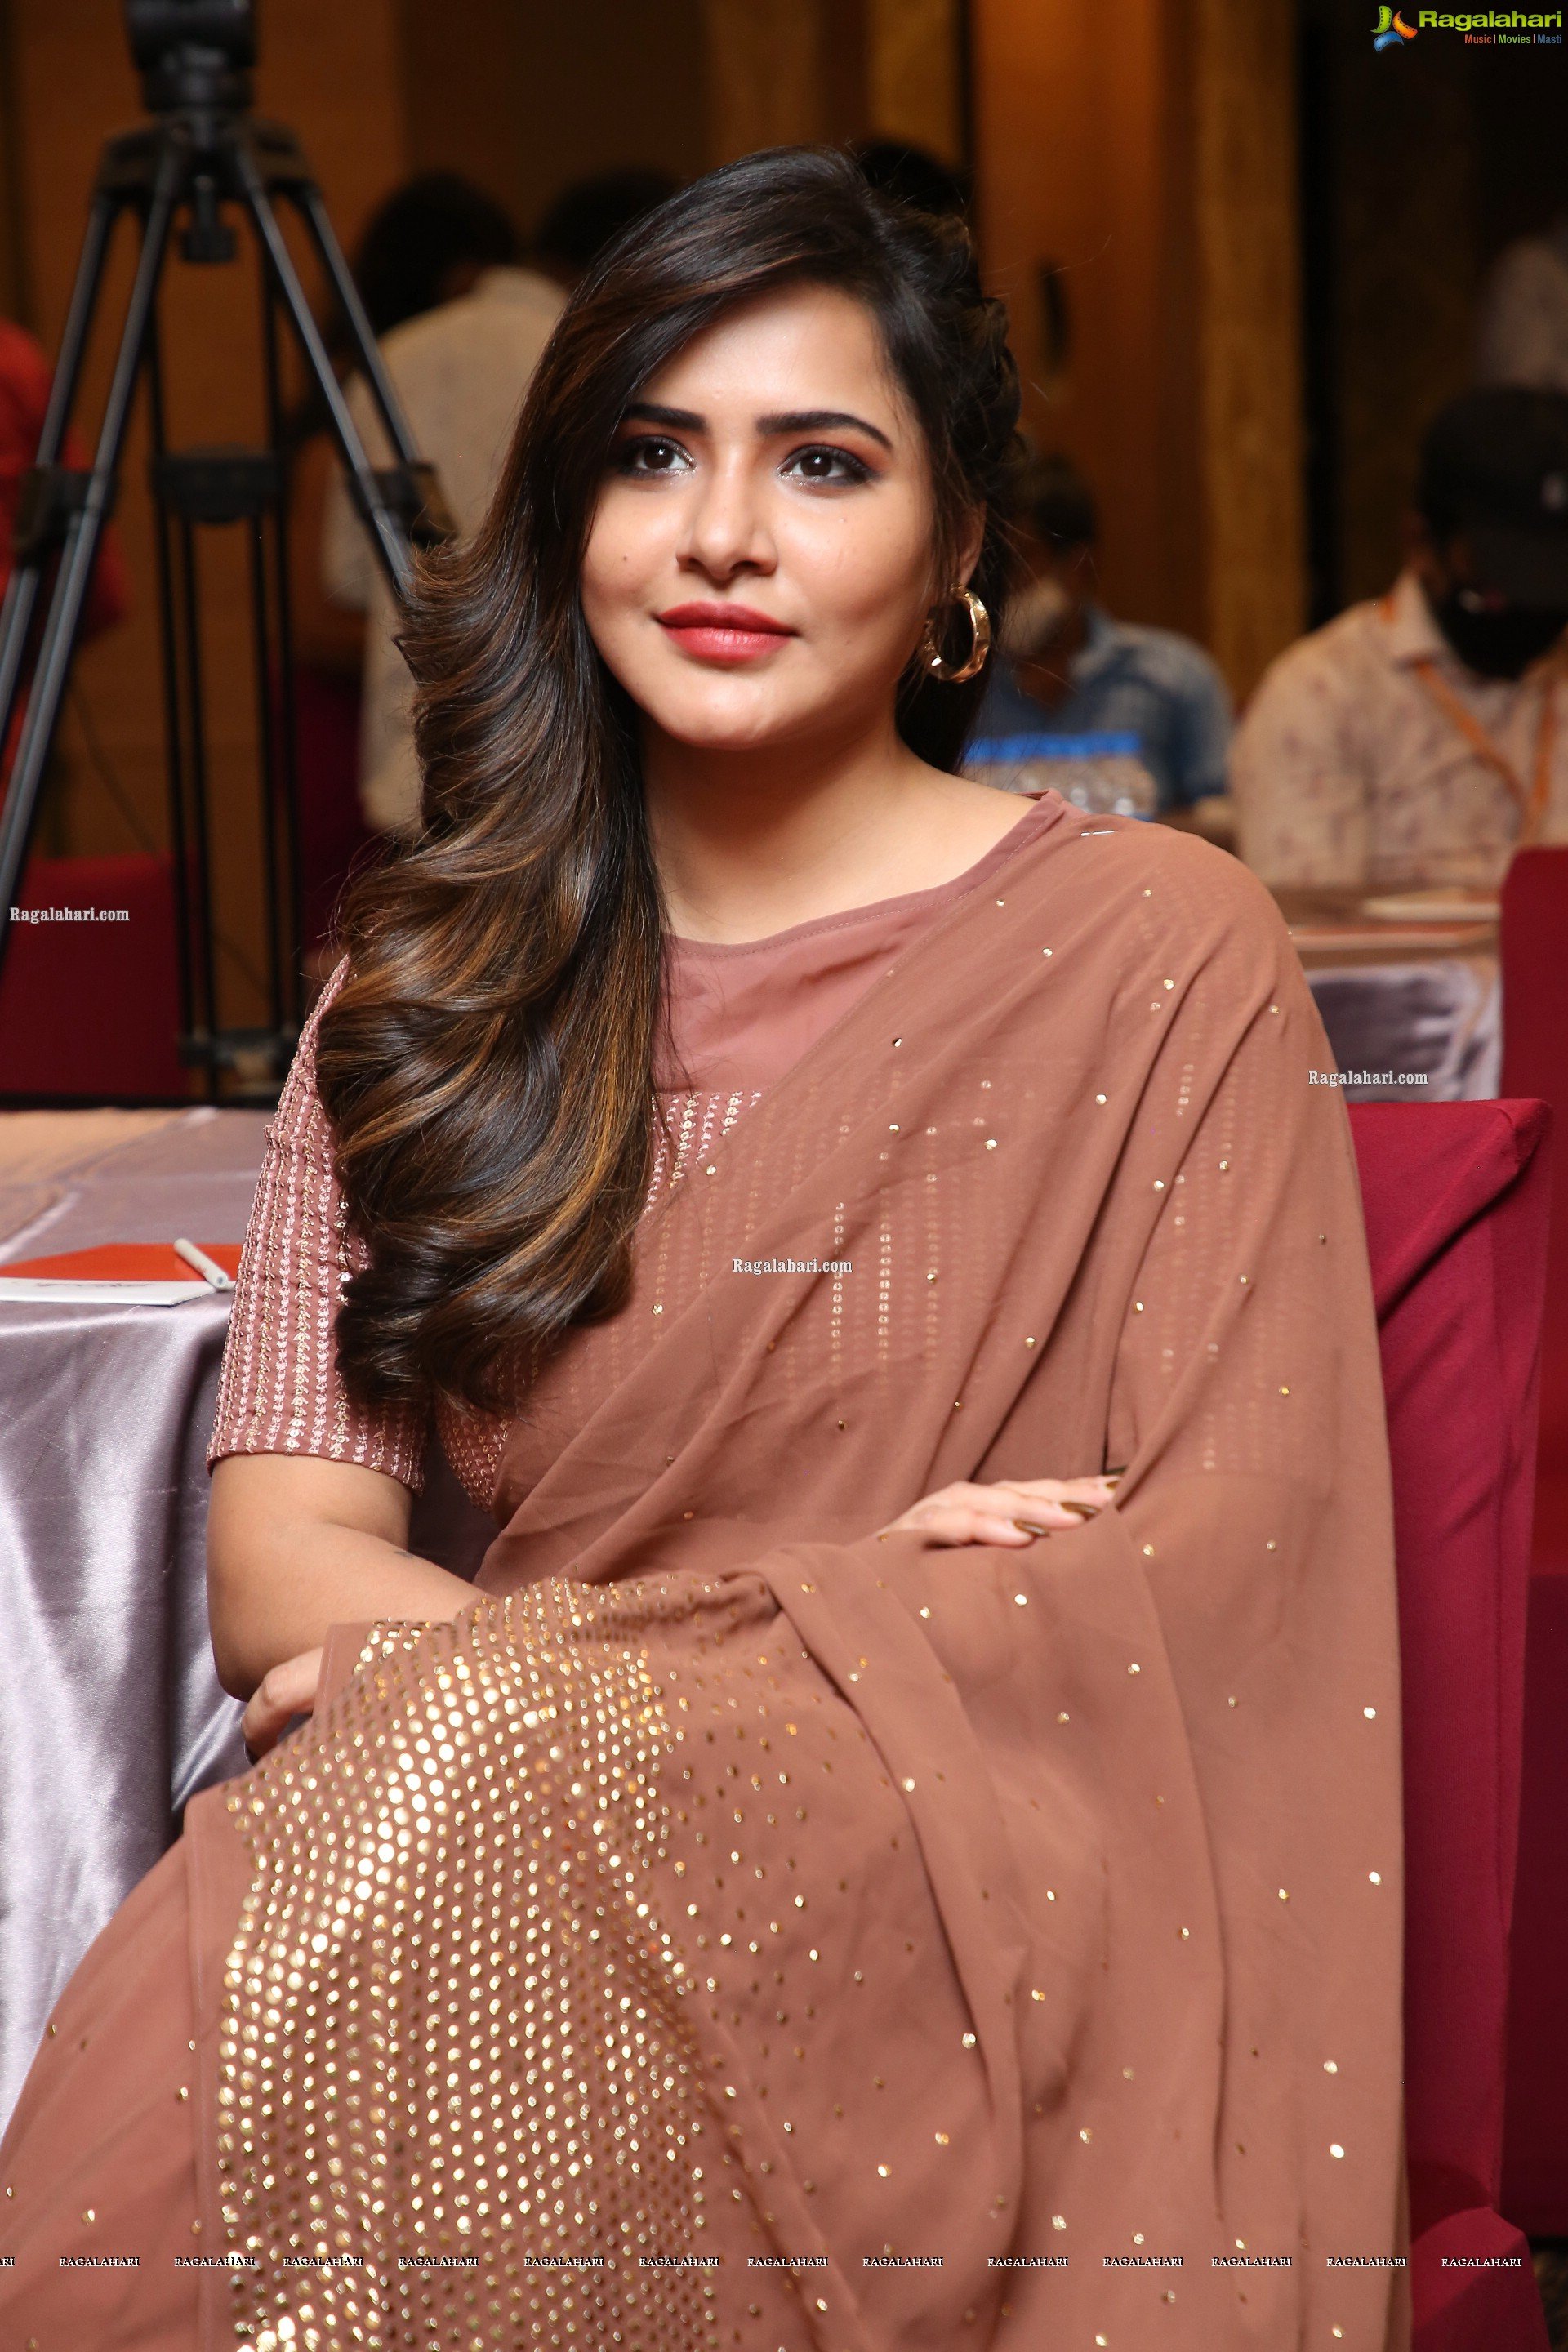 Ashu Reddy in Alluring Light Brown Saree, HD Photo Gallery